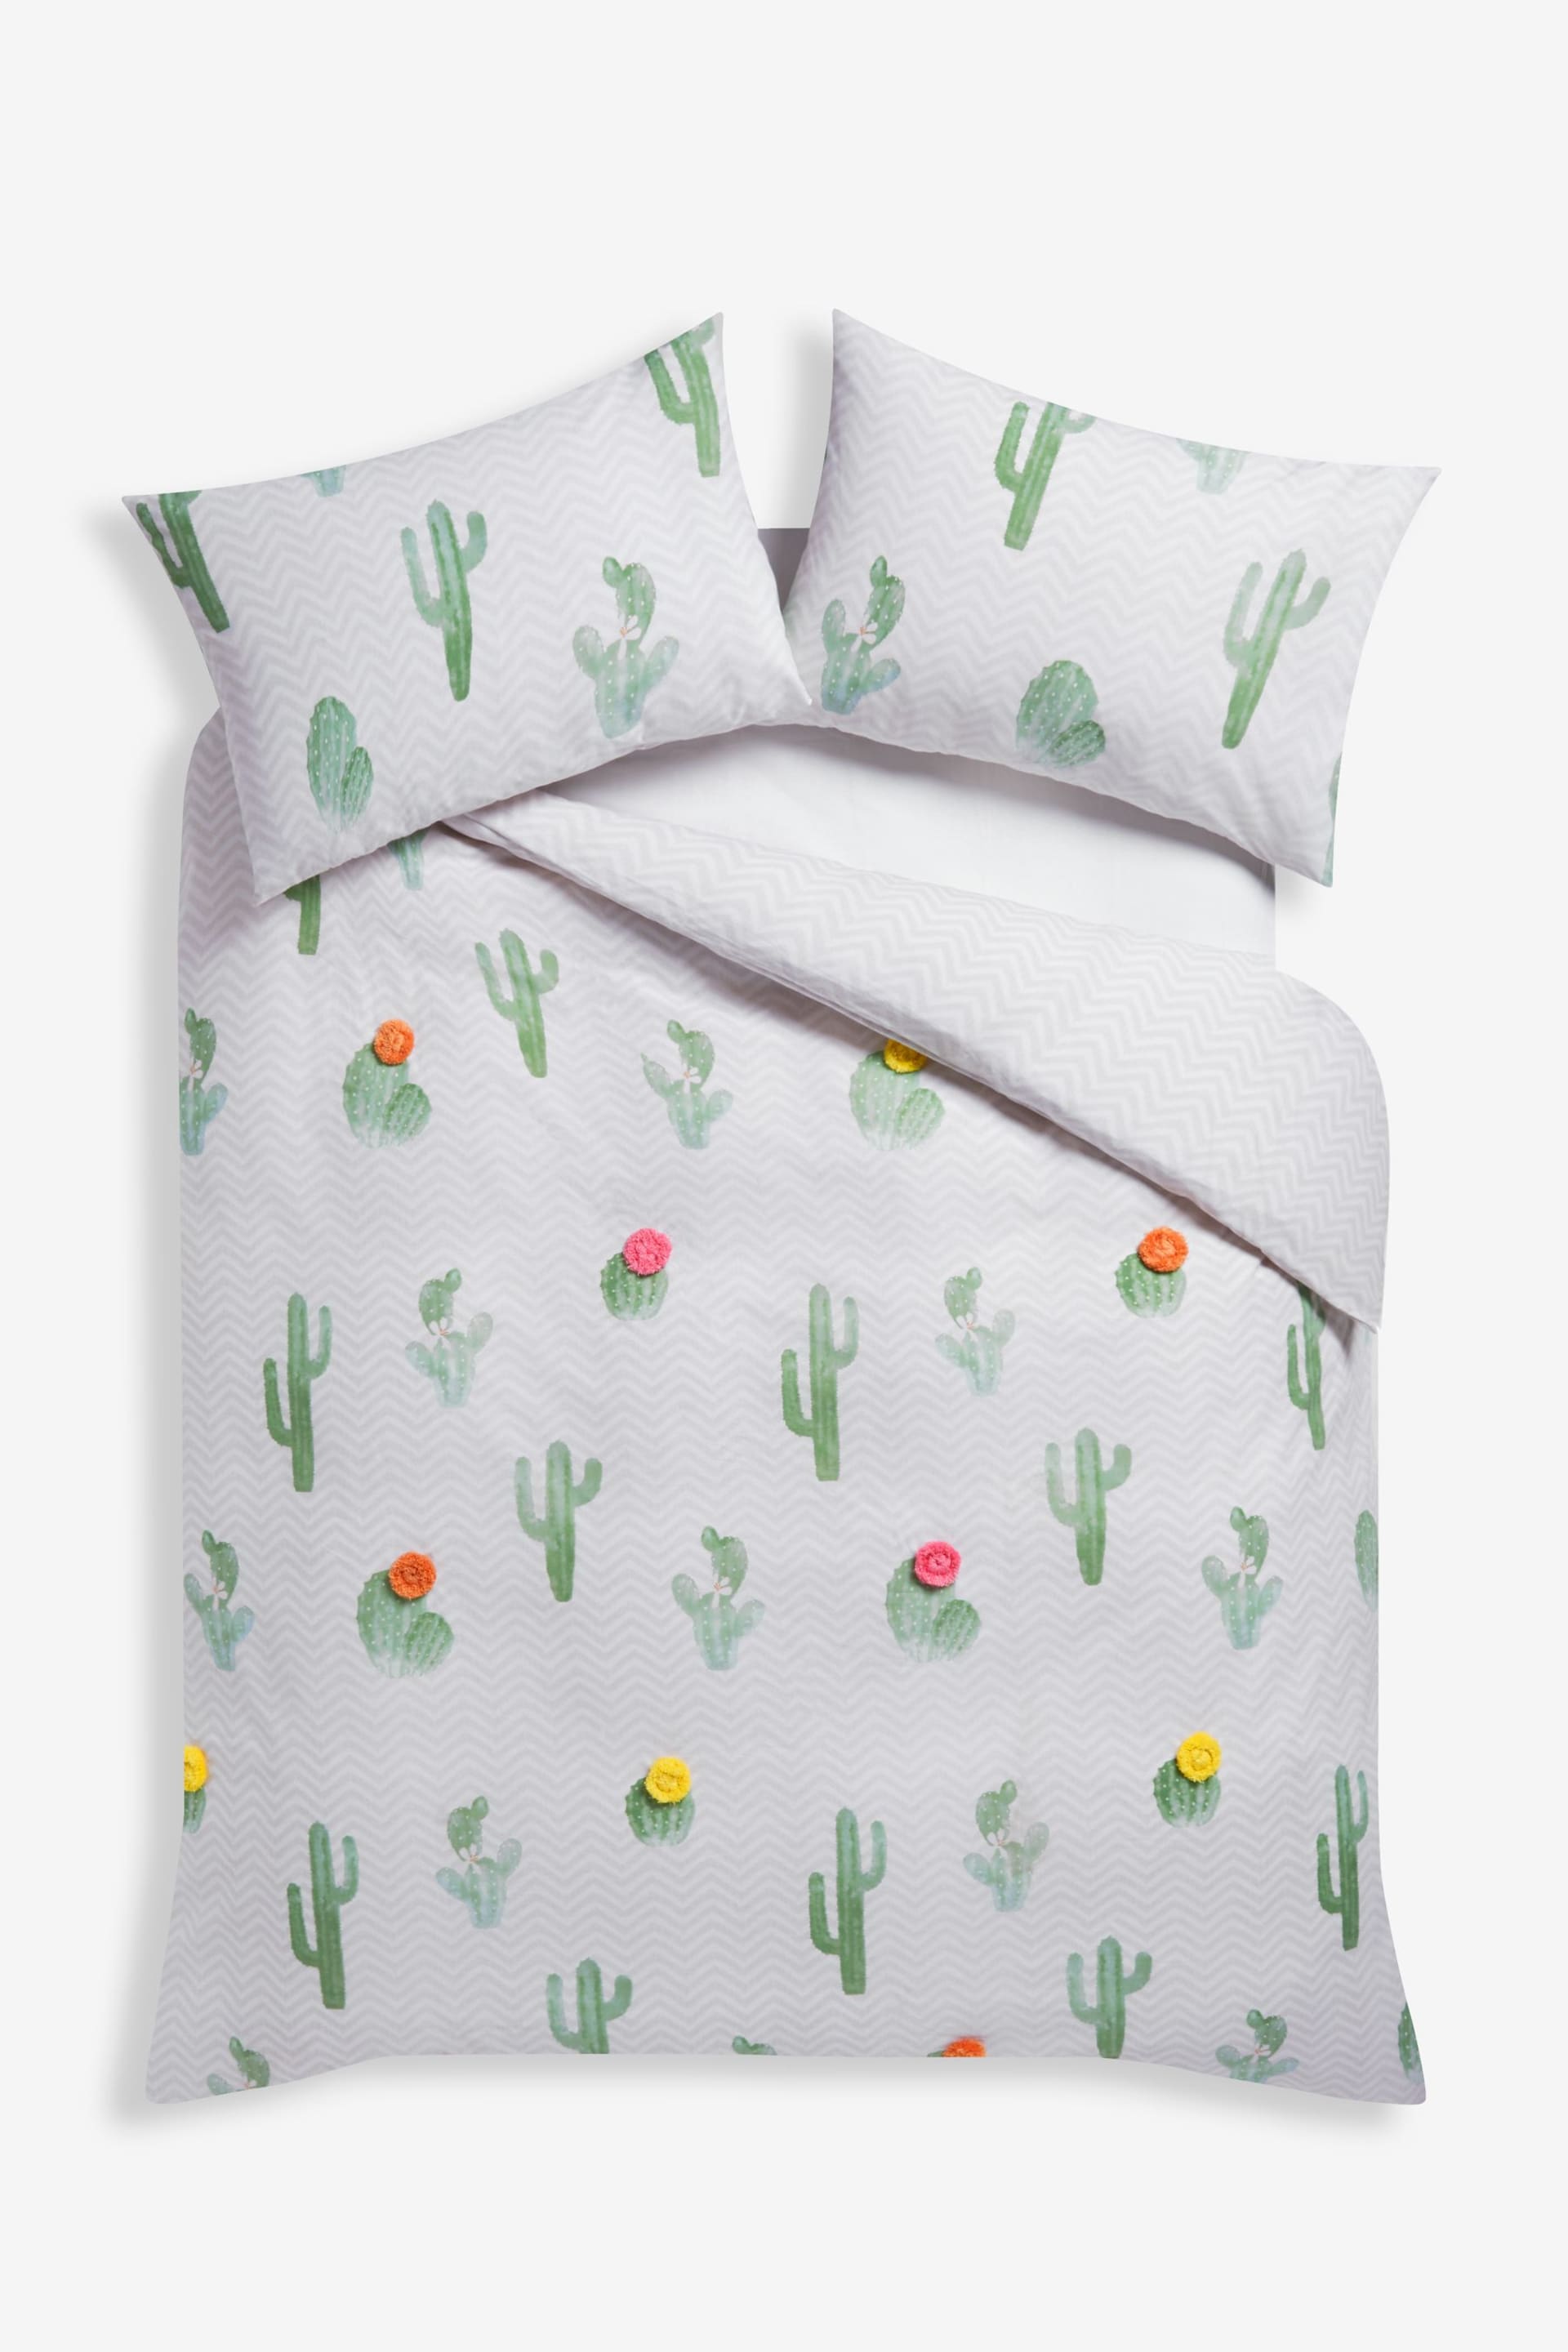 Multi Cactus Pom Pom Bedding Duvet Cover and Pillowcase Set - Image 4 of 4